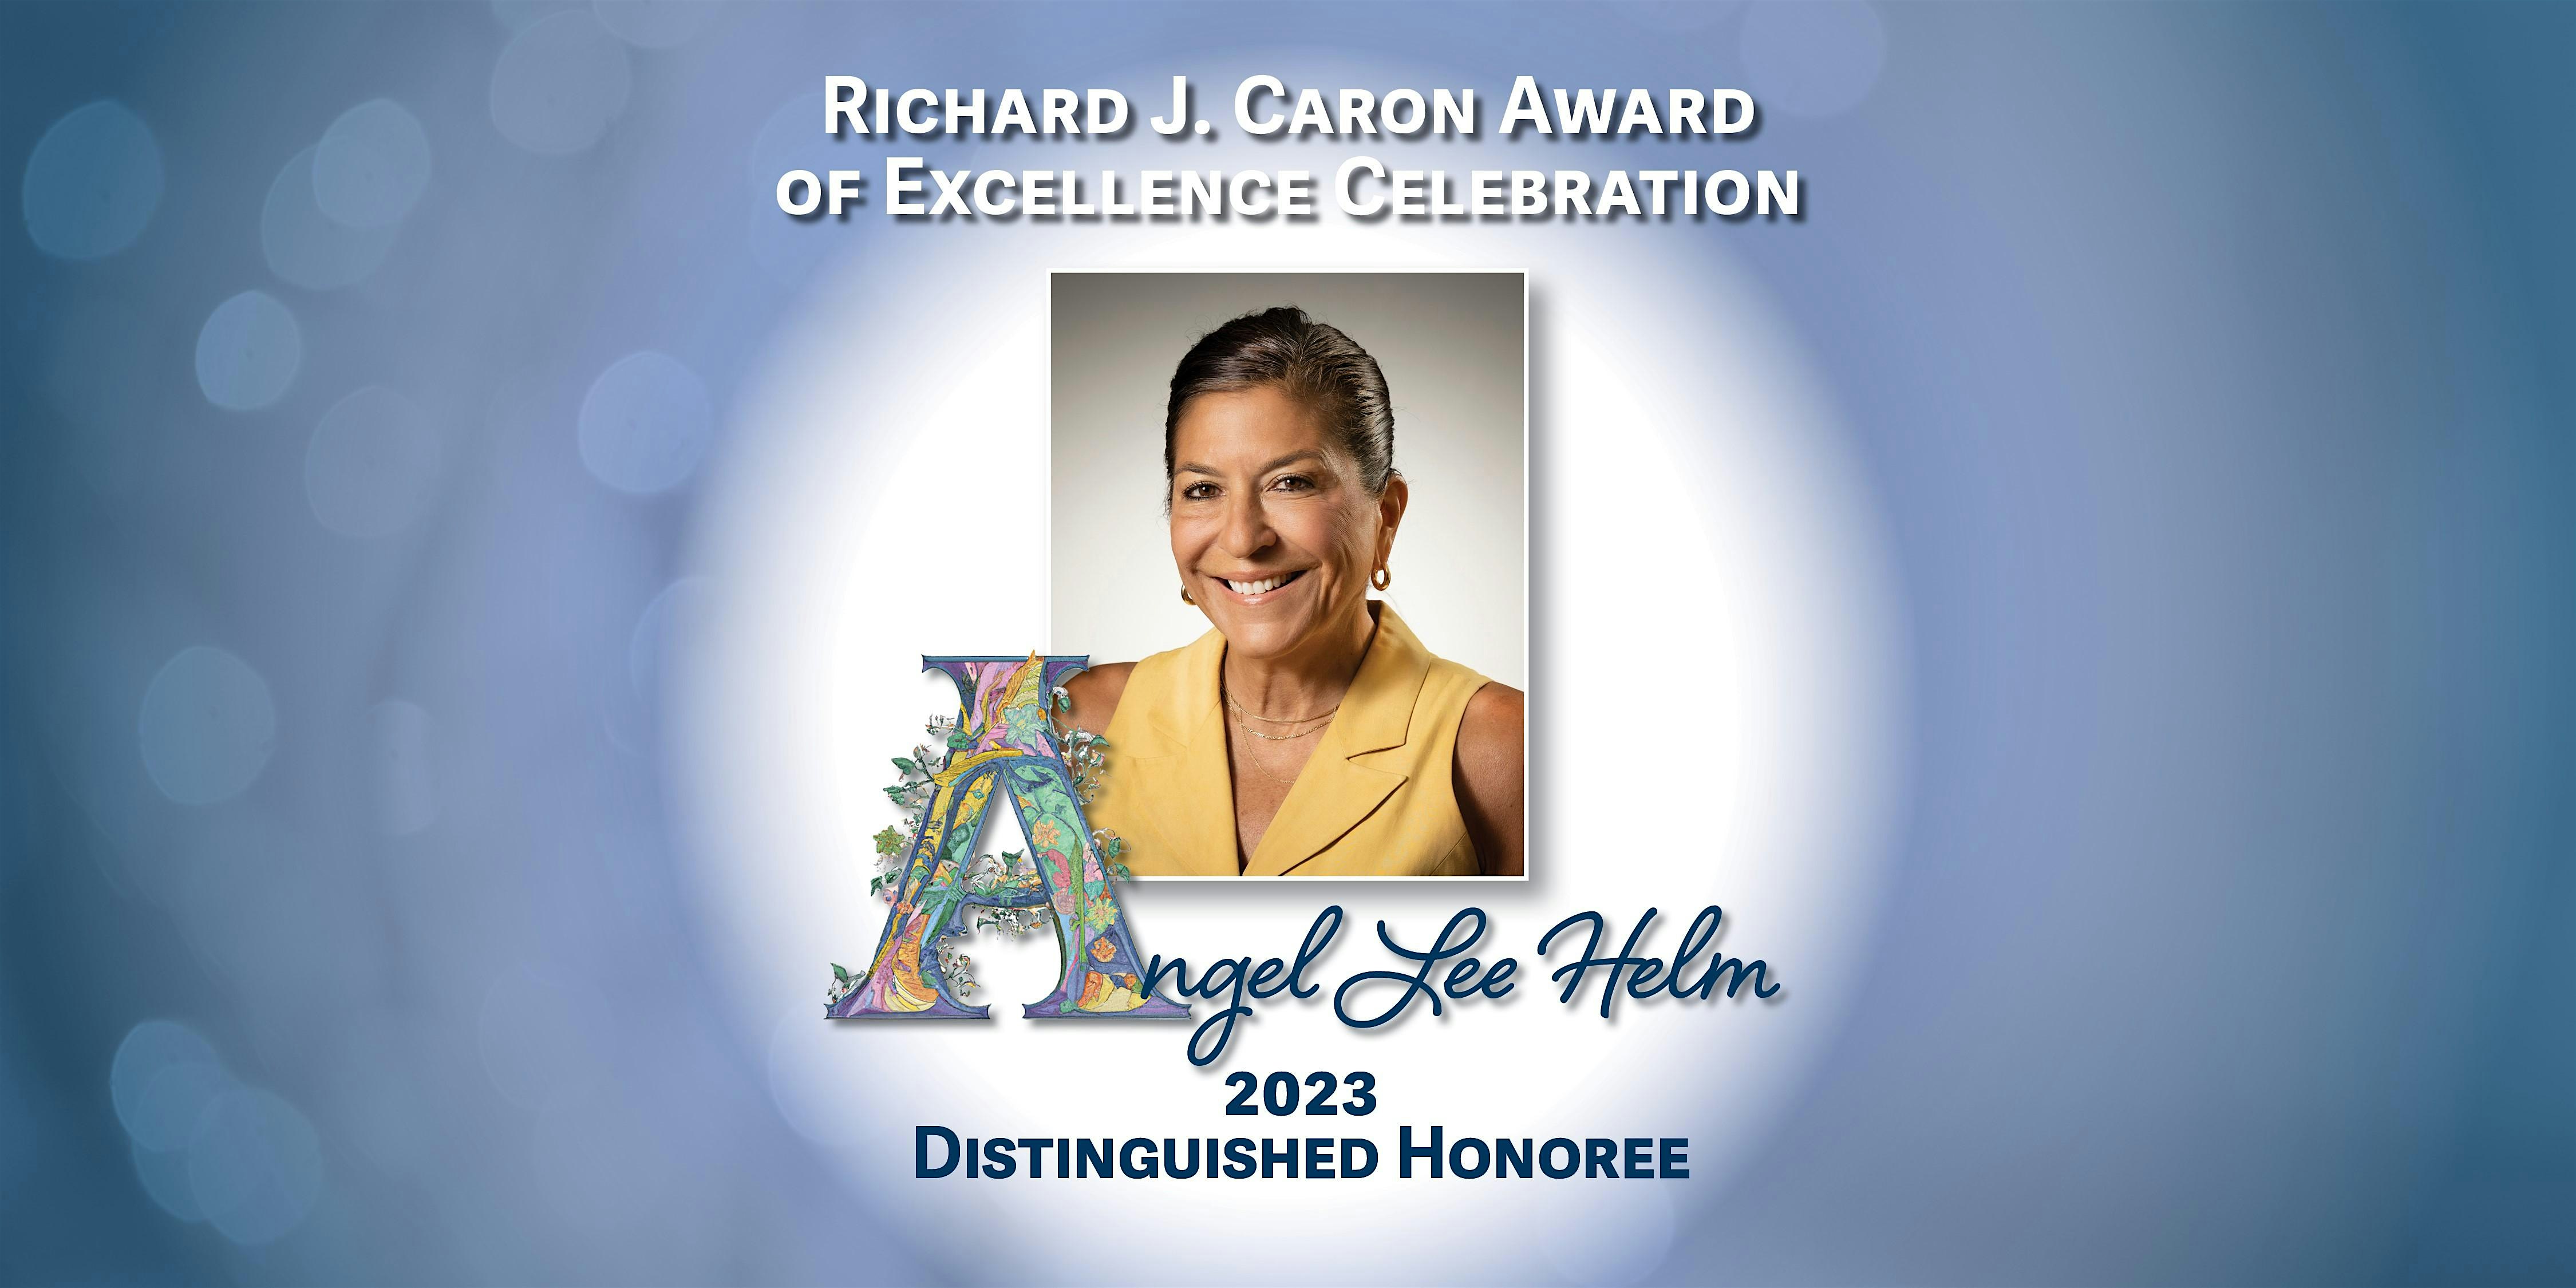 Richard J. Caron Award of Excellence Celebration